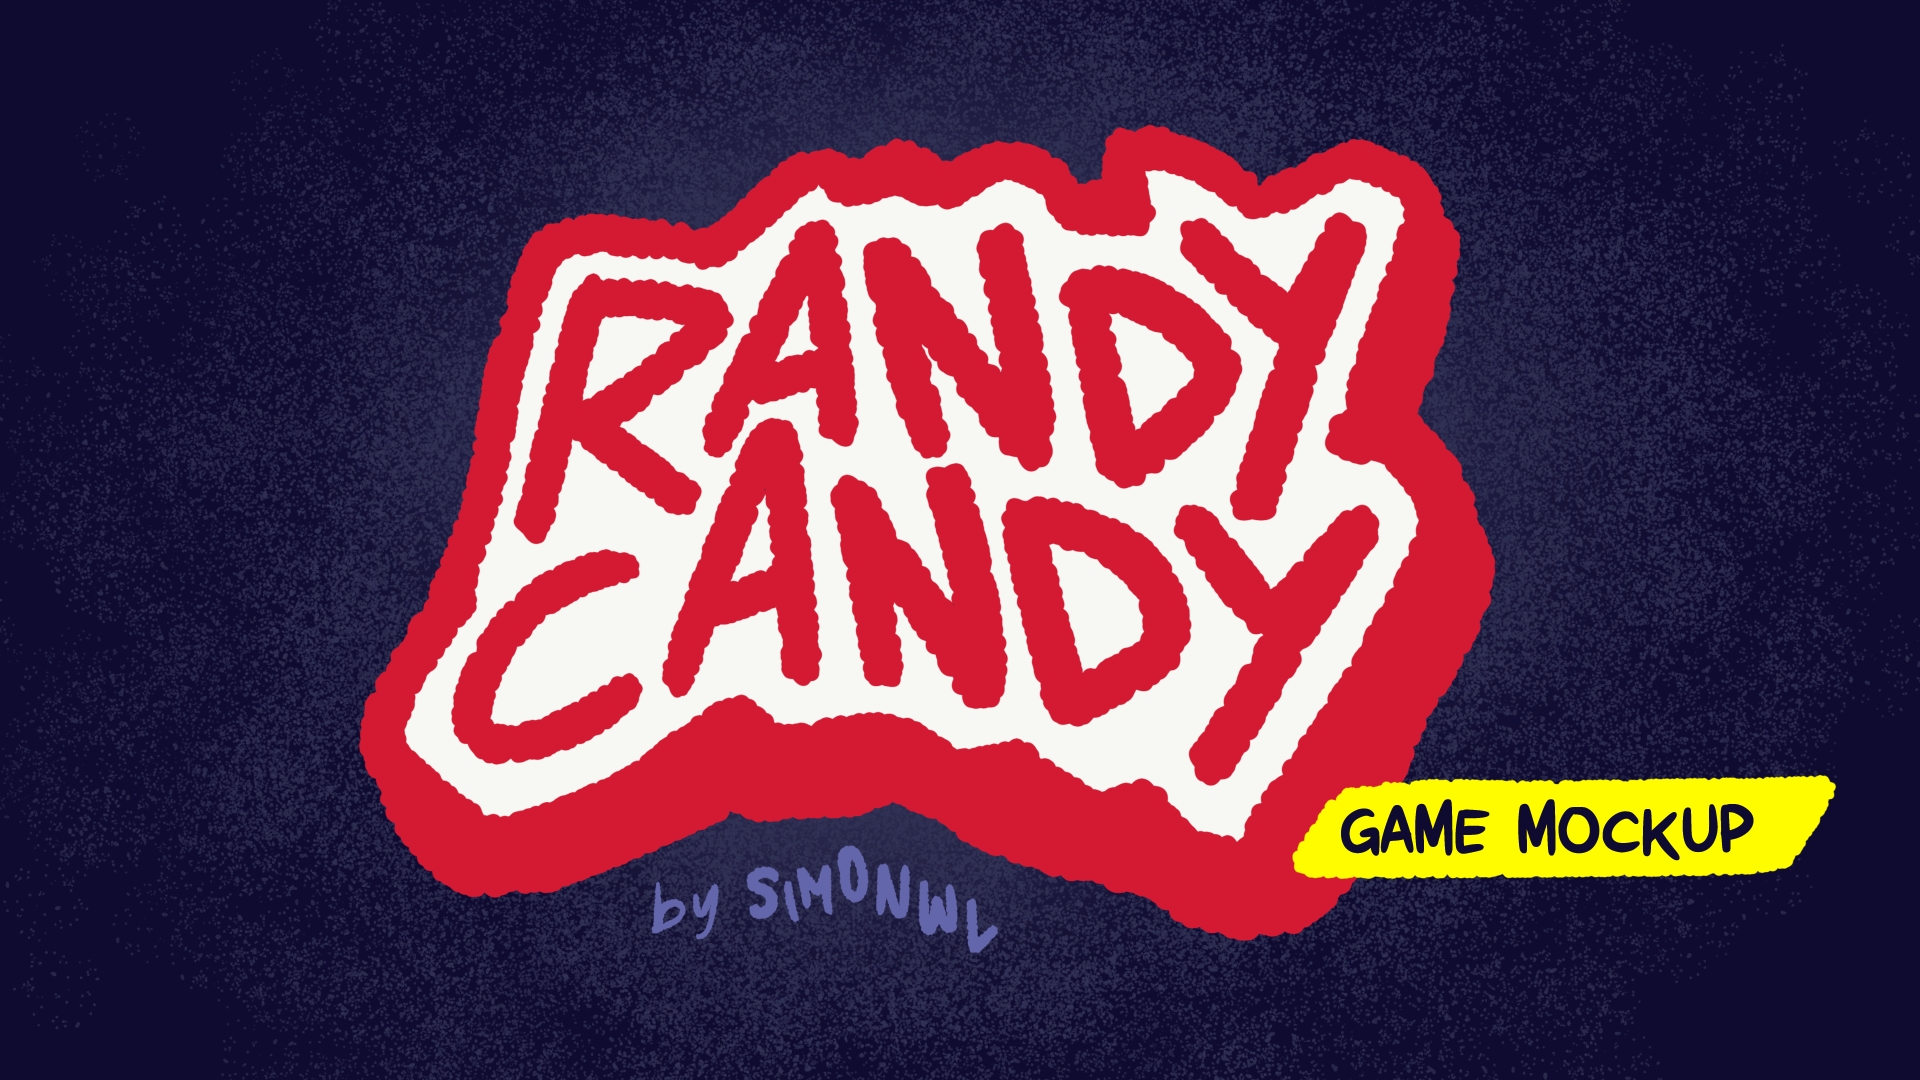 Randy Candy [GAME MOCKUP]